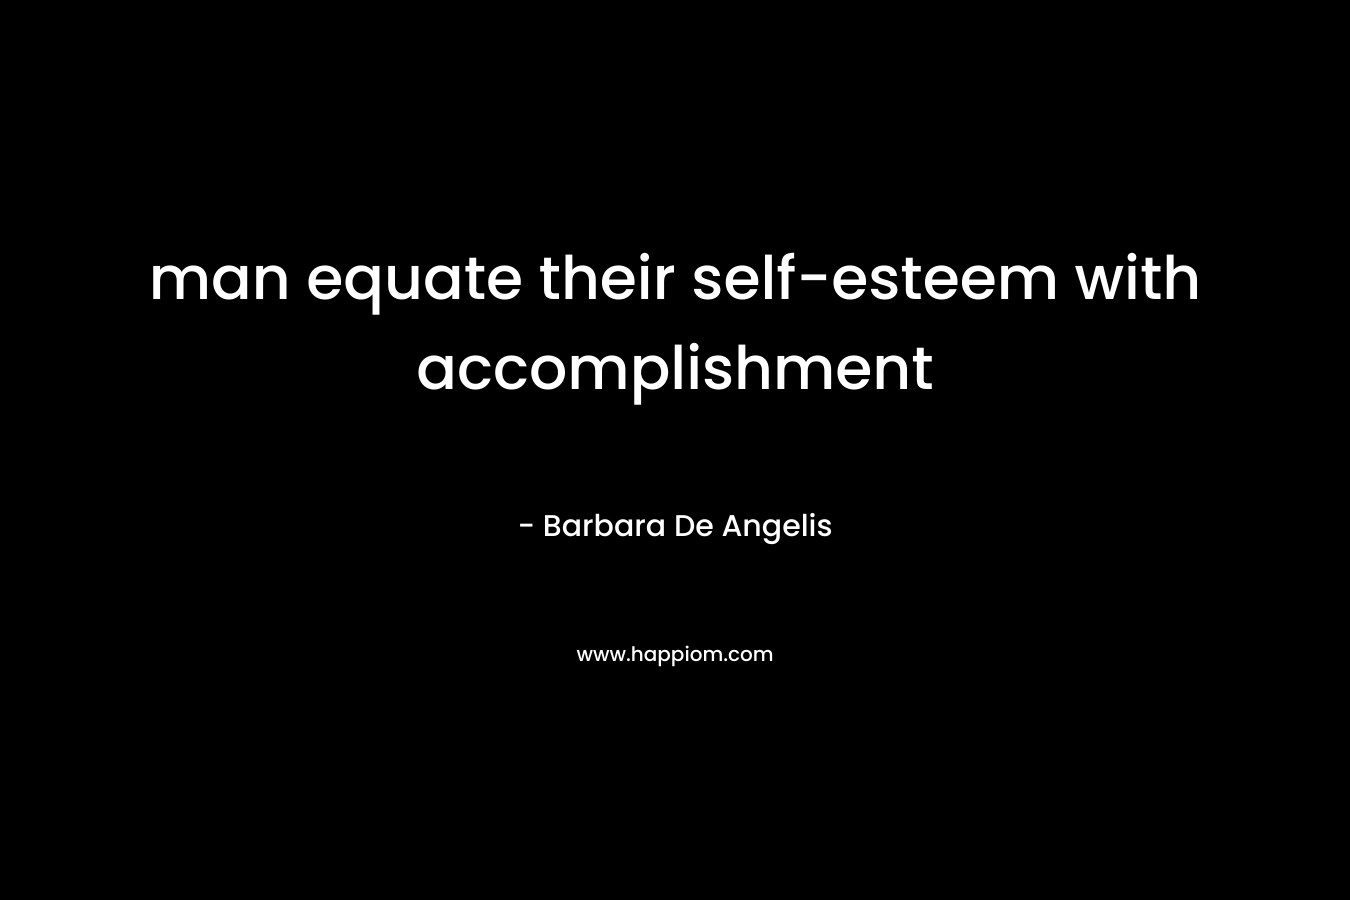 man equate their self-esteem with accomplishment